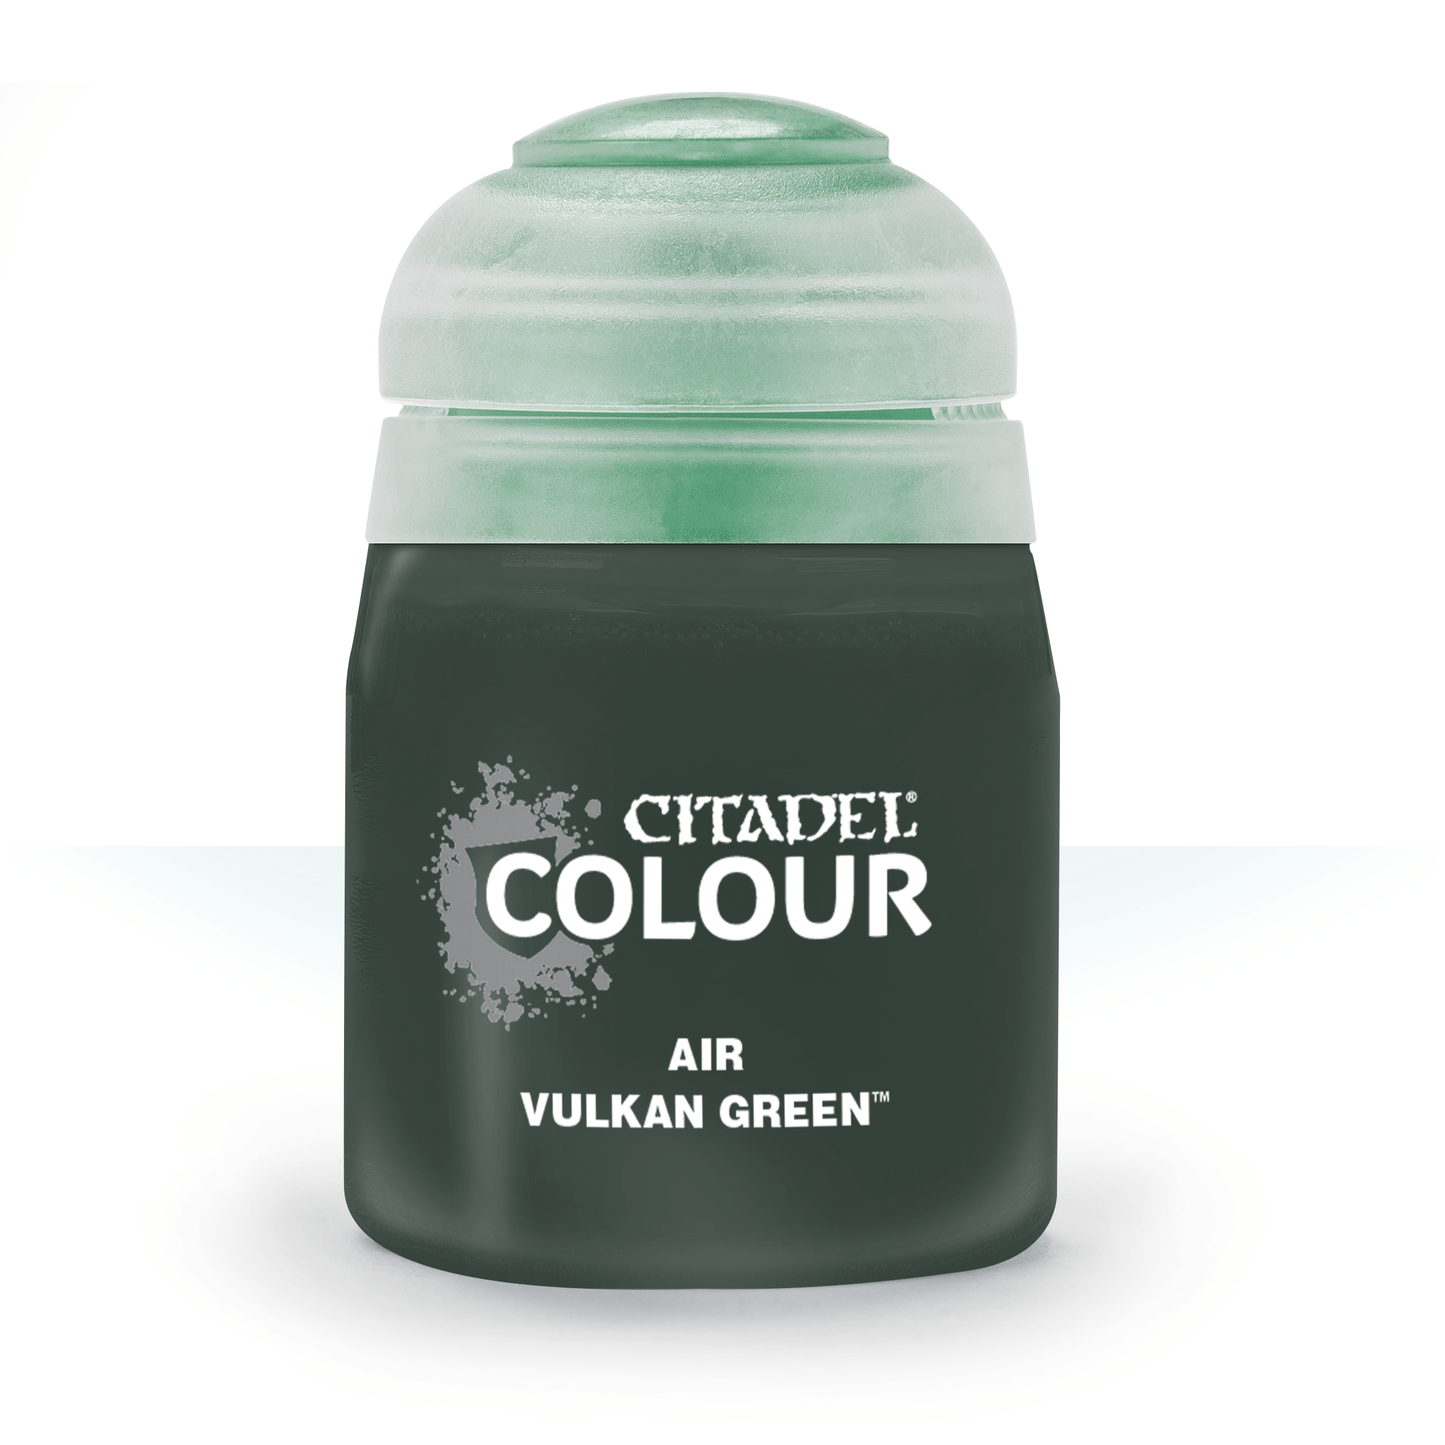 Vulkan Green - (Air) - (Last Chance to Buy)